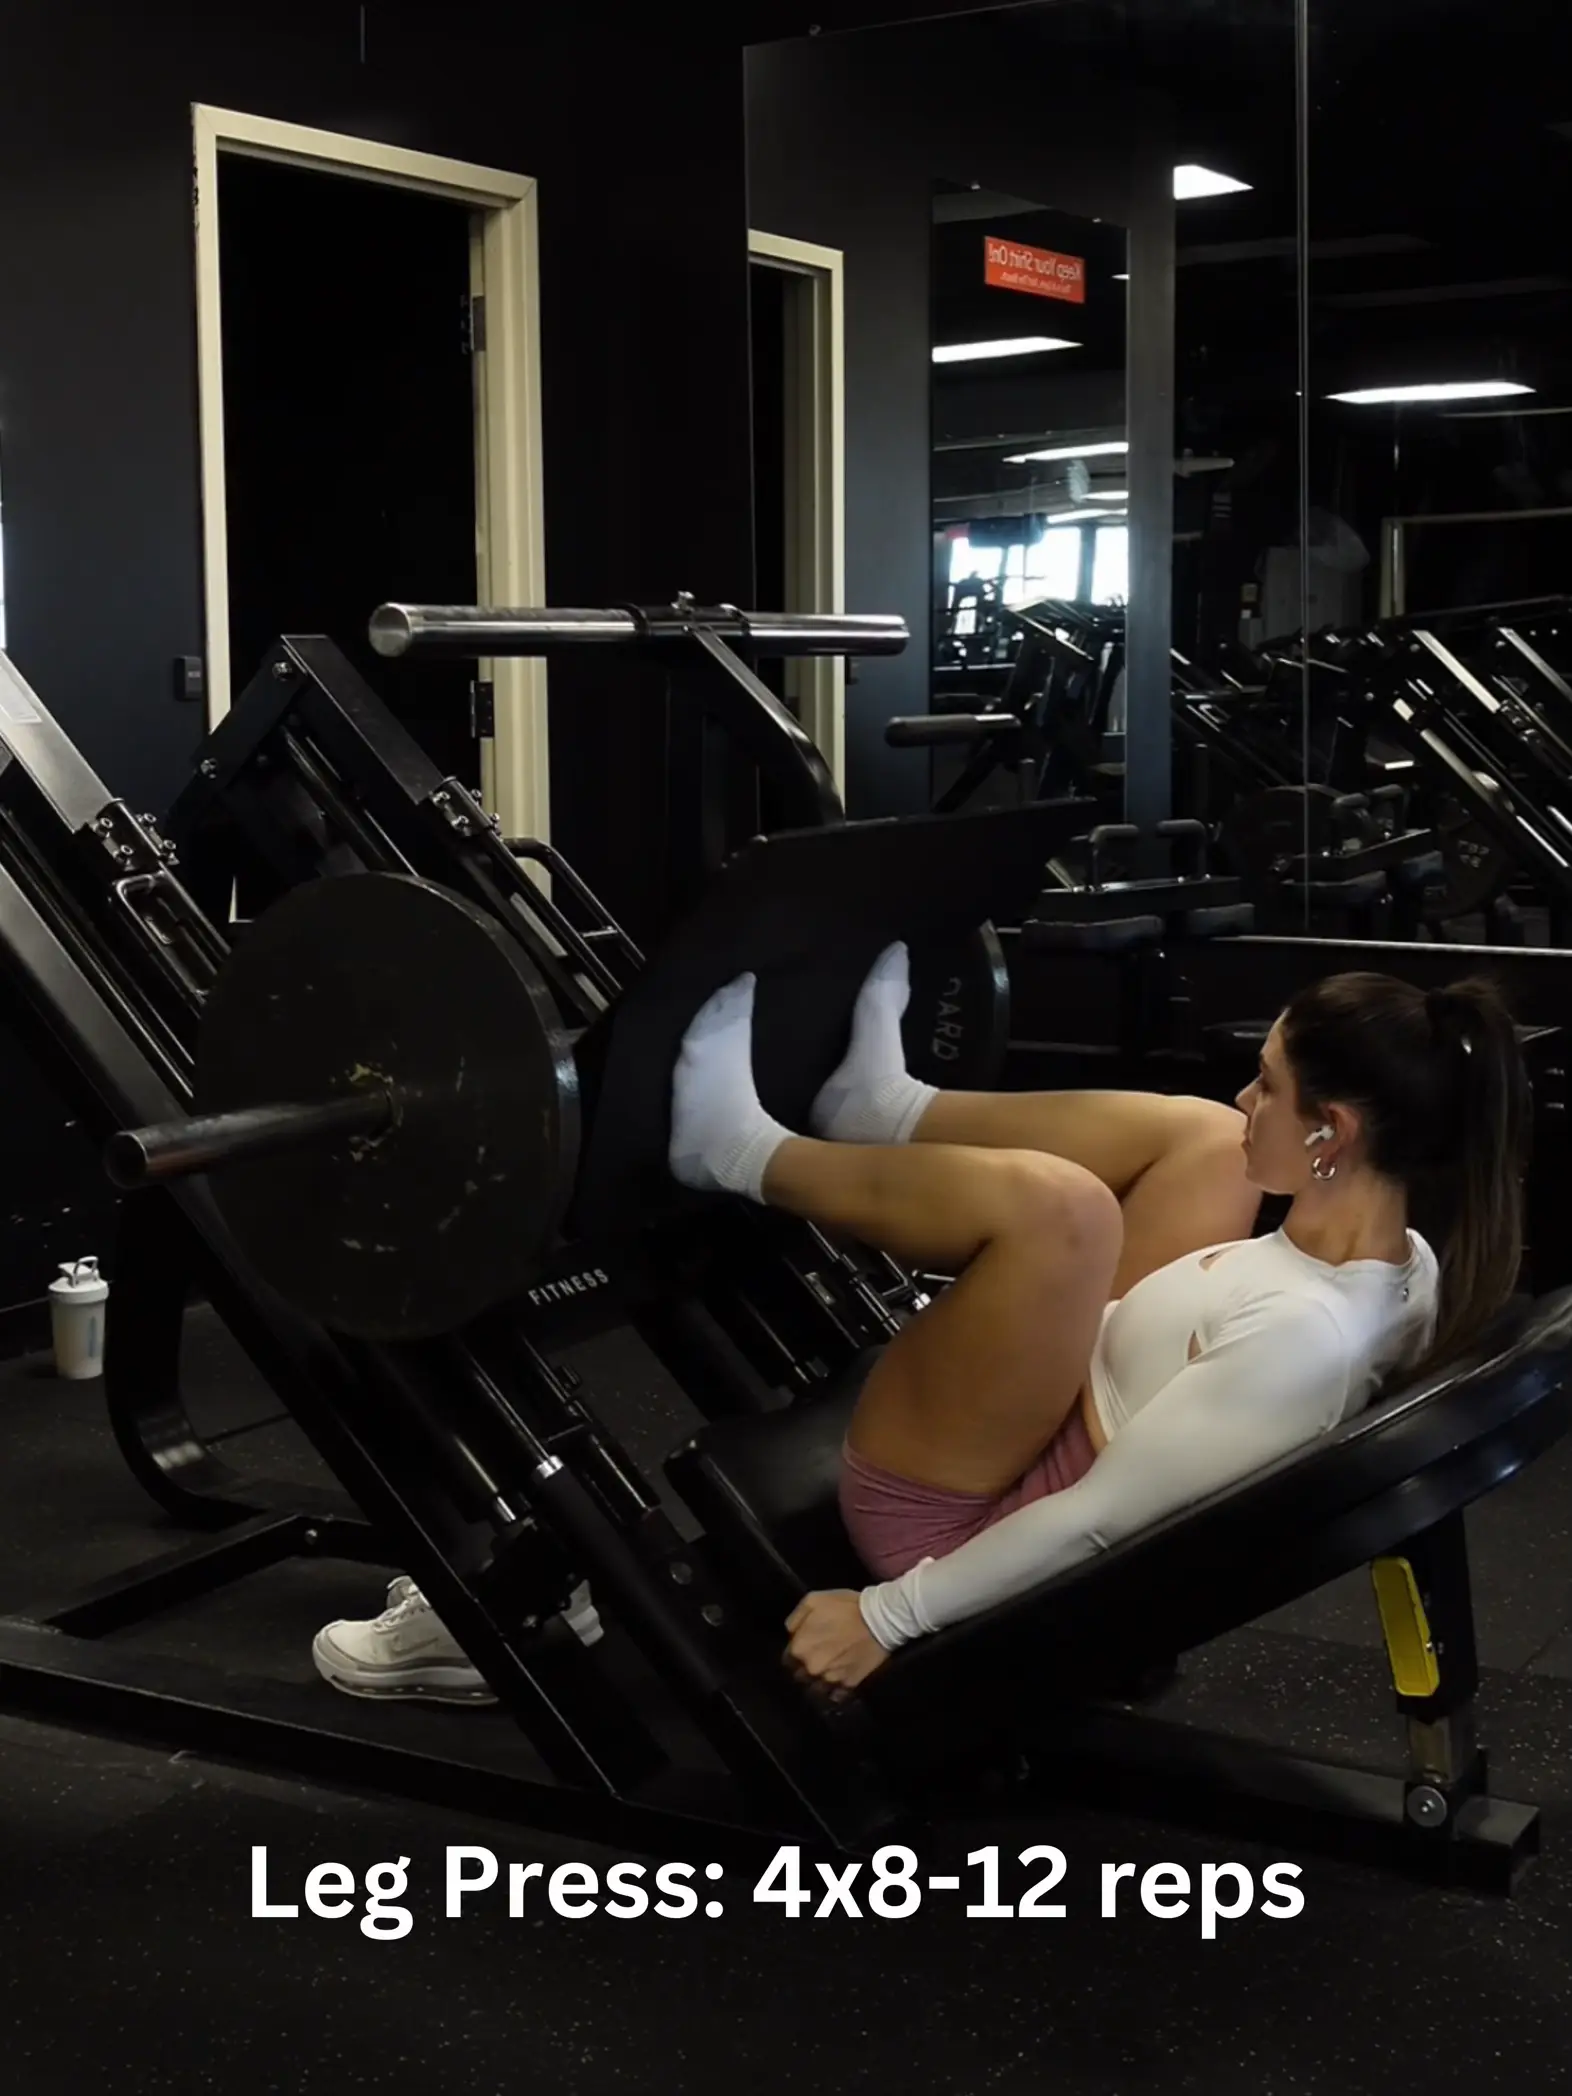 Full leg workout swipe left🔥 Reps & Sets 👇🏾 Leg extensions 12 x